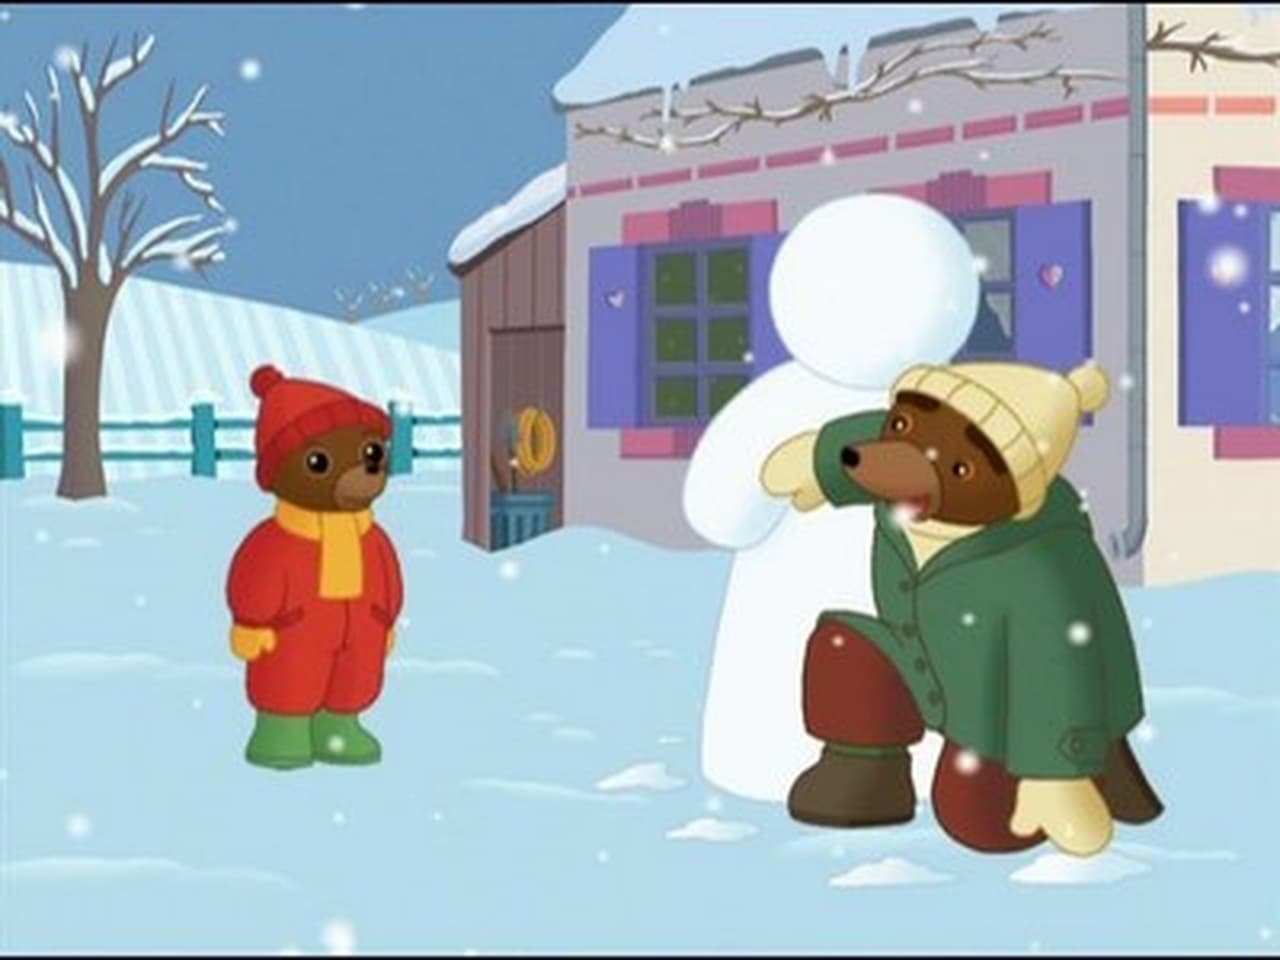 Little Brown Bear makes a snowman